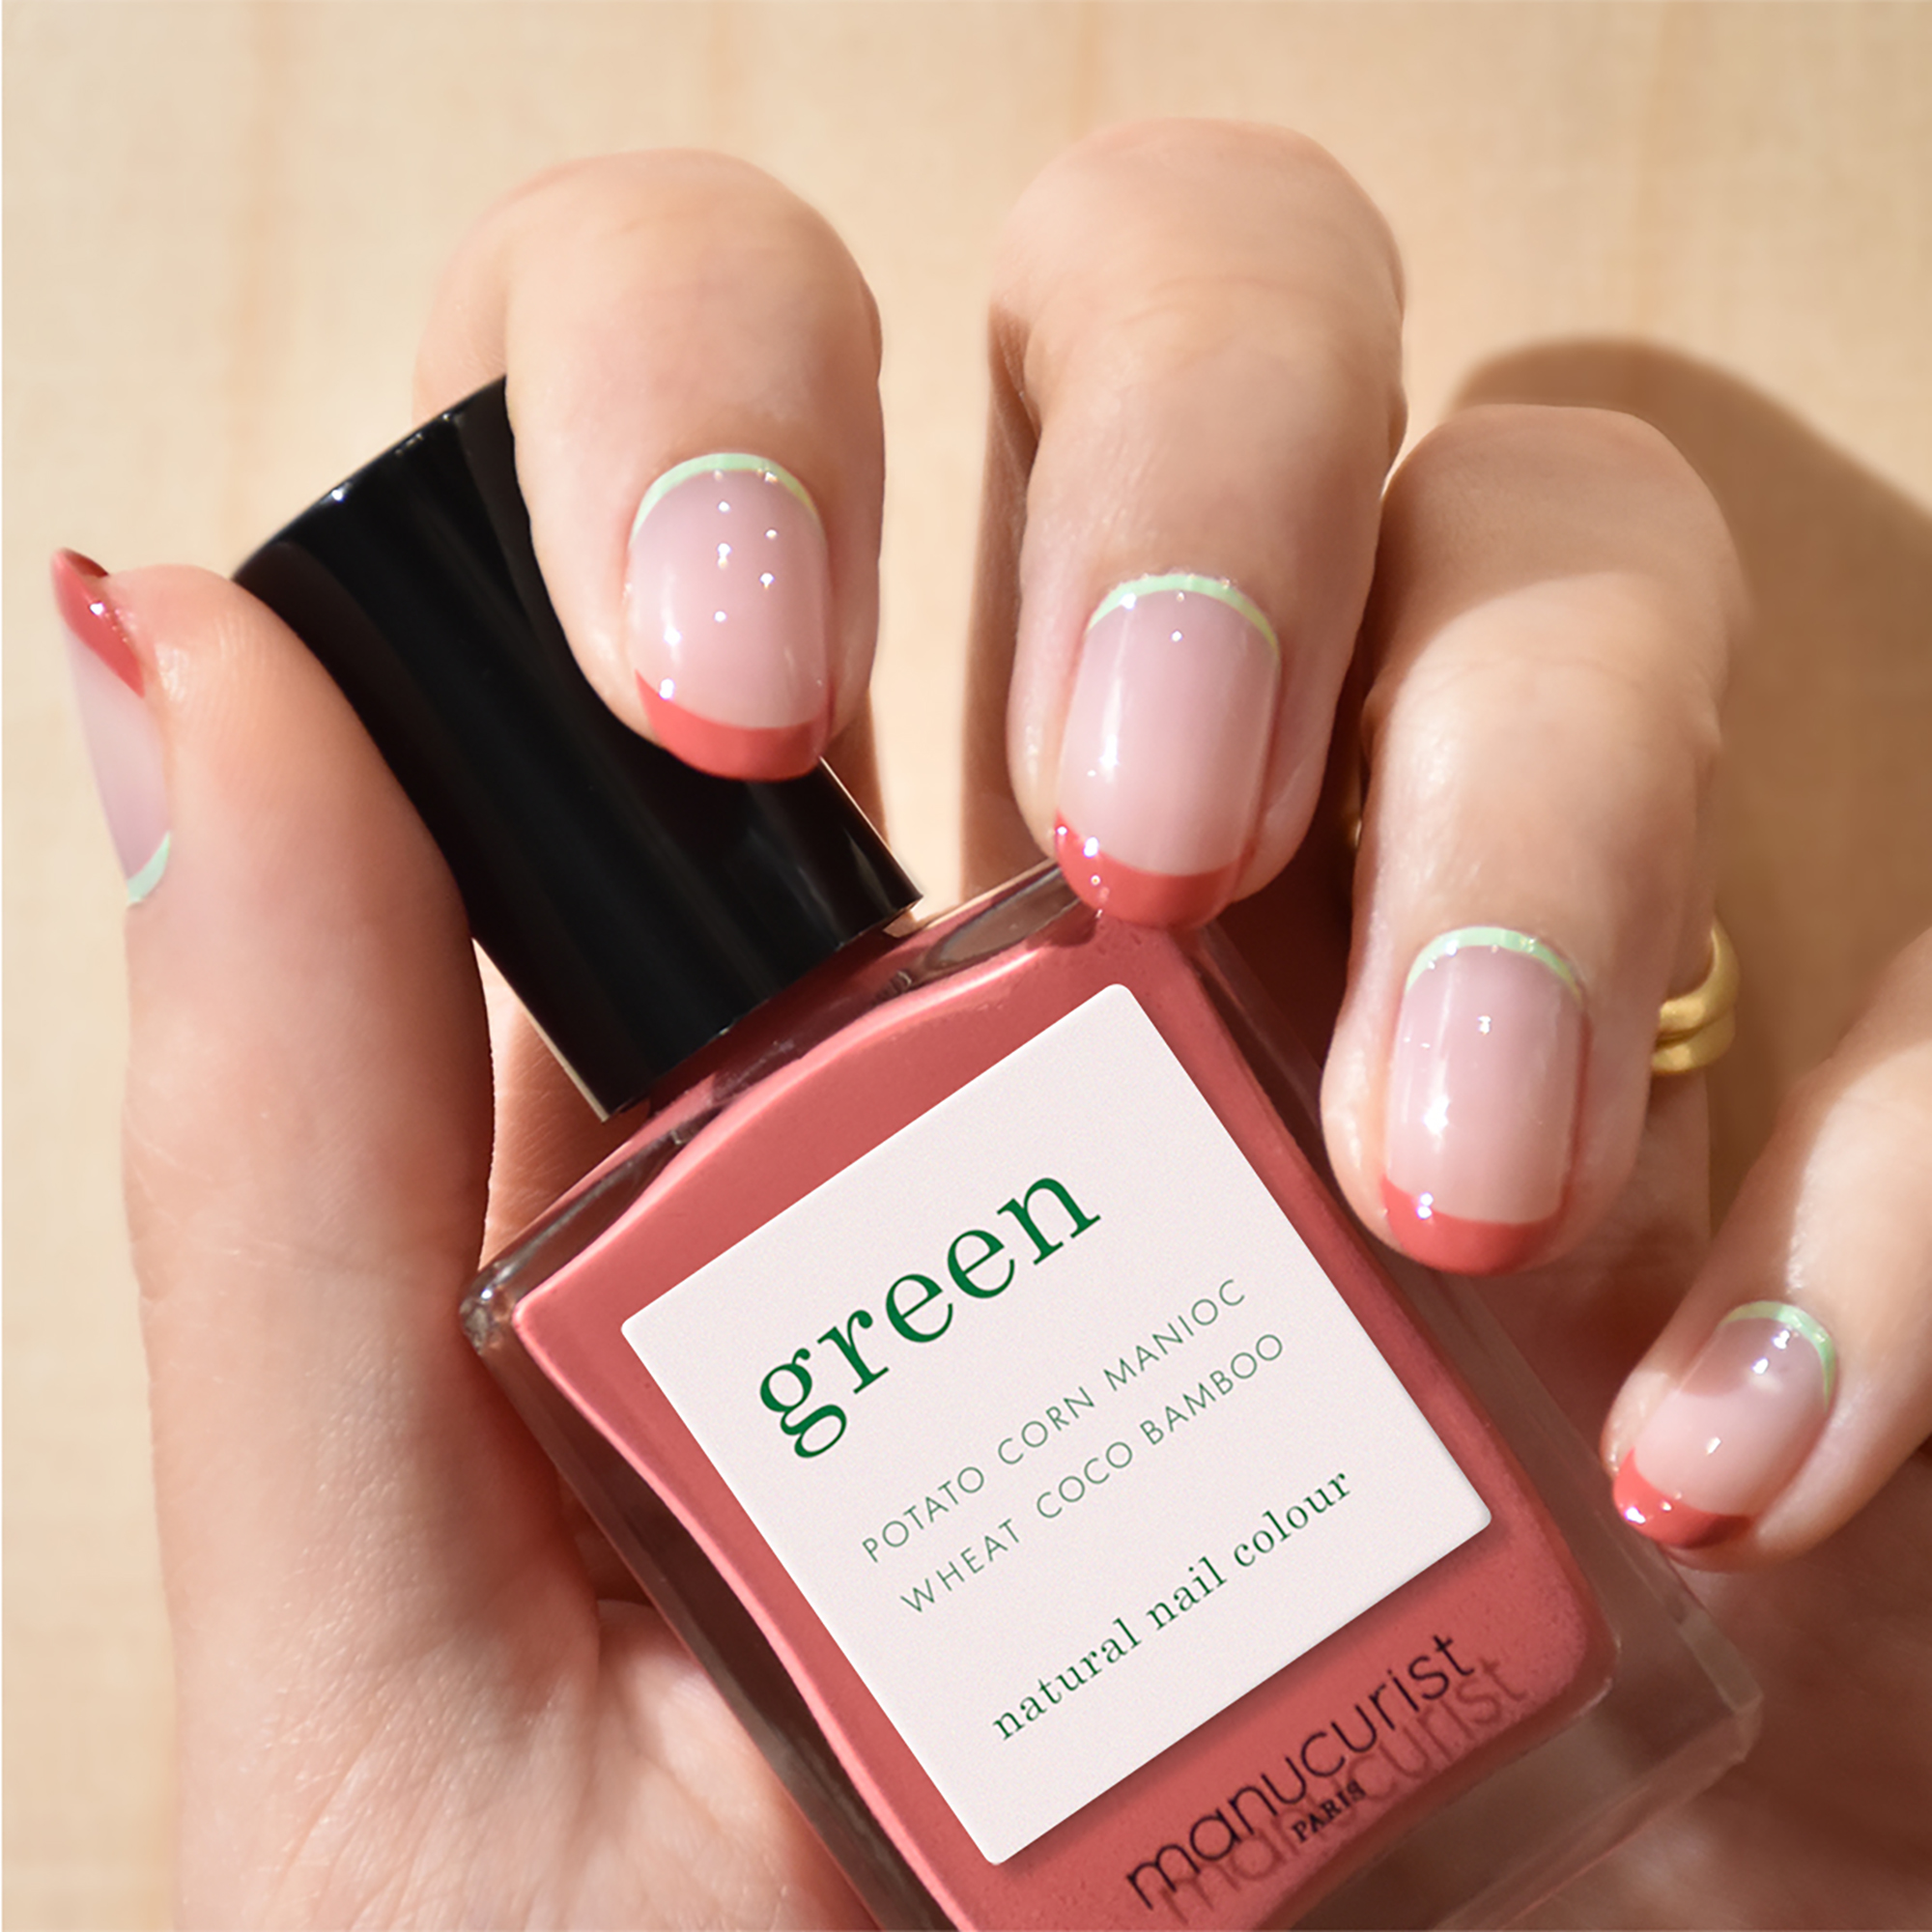 Bois de rose nail polish - Green Range